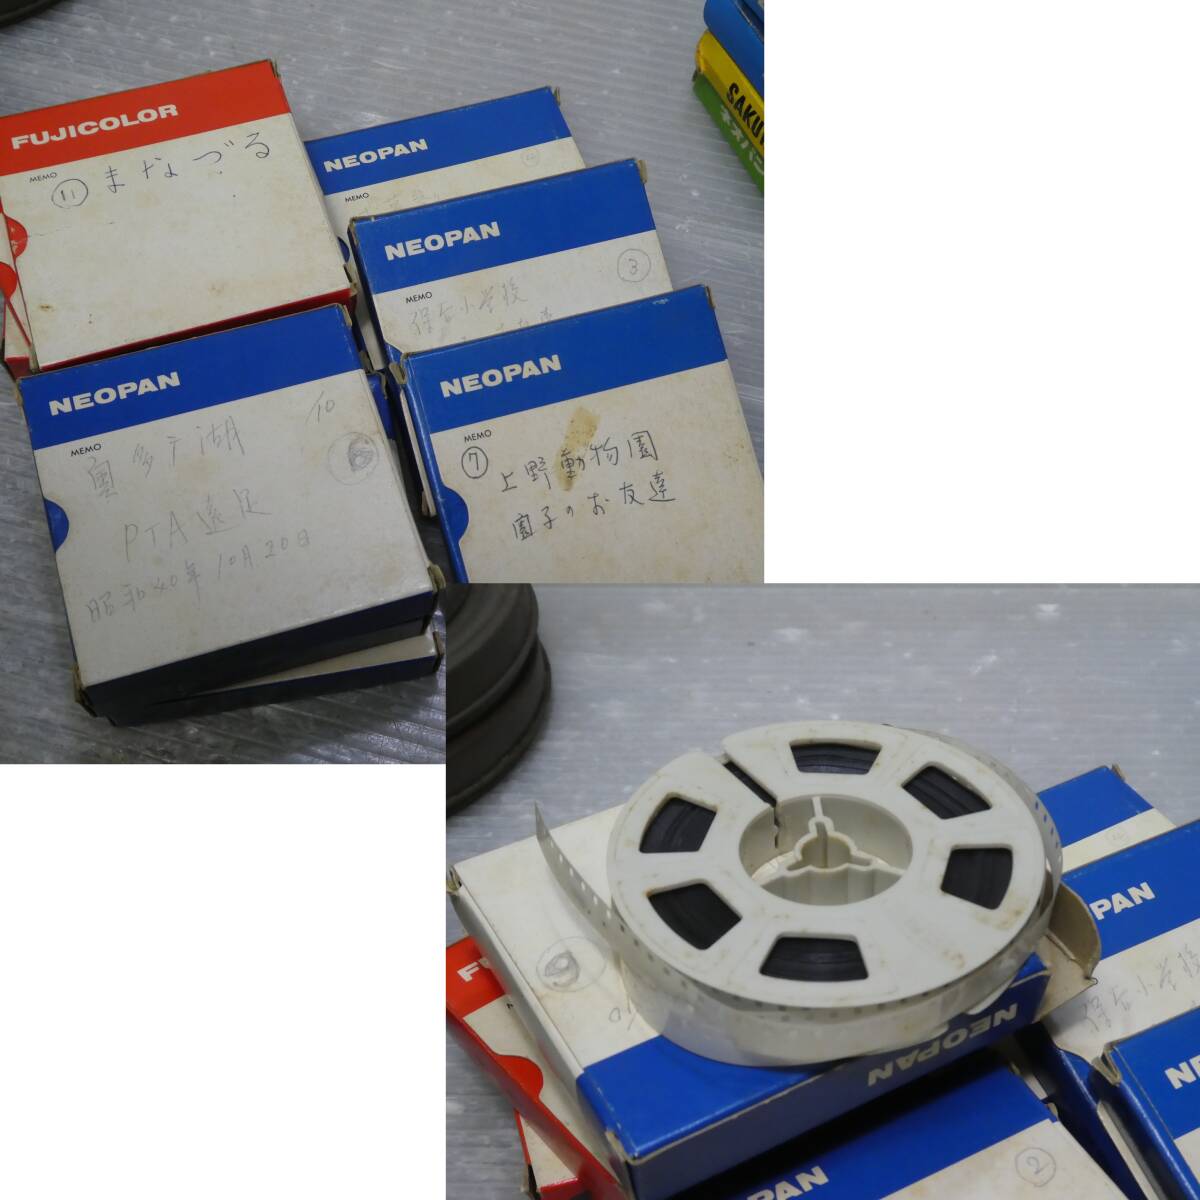  film ( compact ) camera (606) photographing settled 8mm film NEOPAN SAKURAFILM FUJIFILM Junk set 